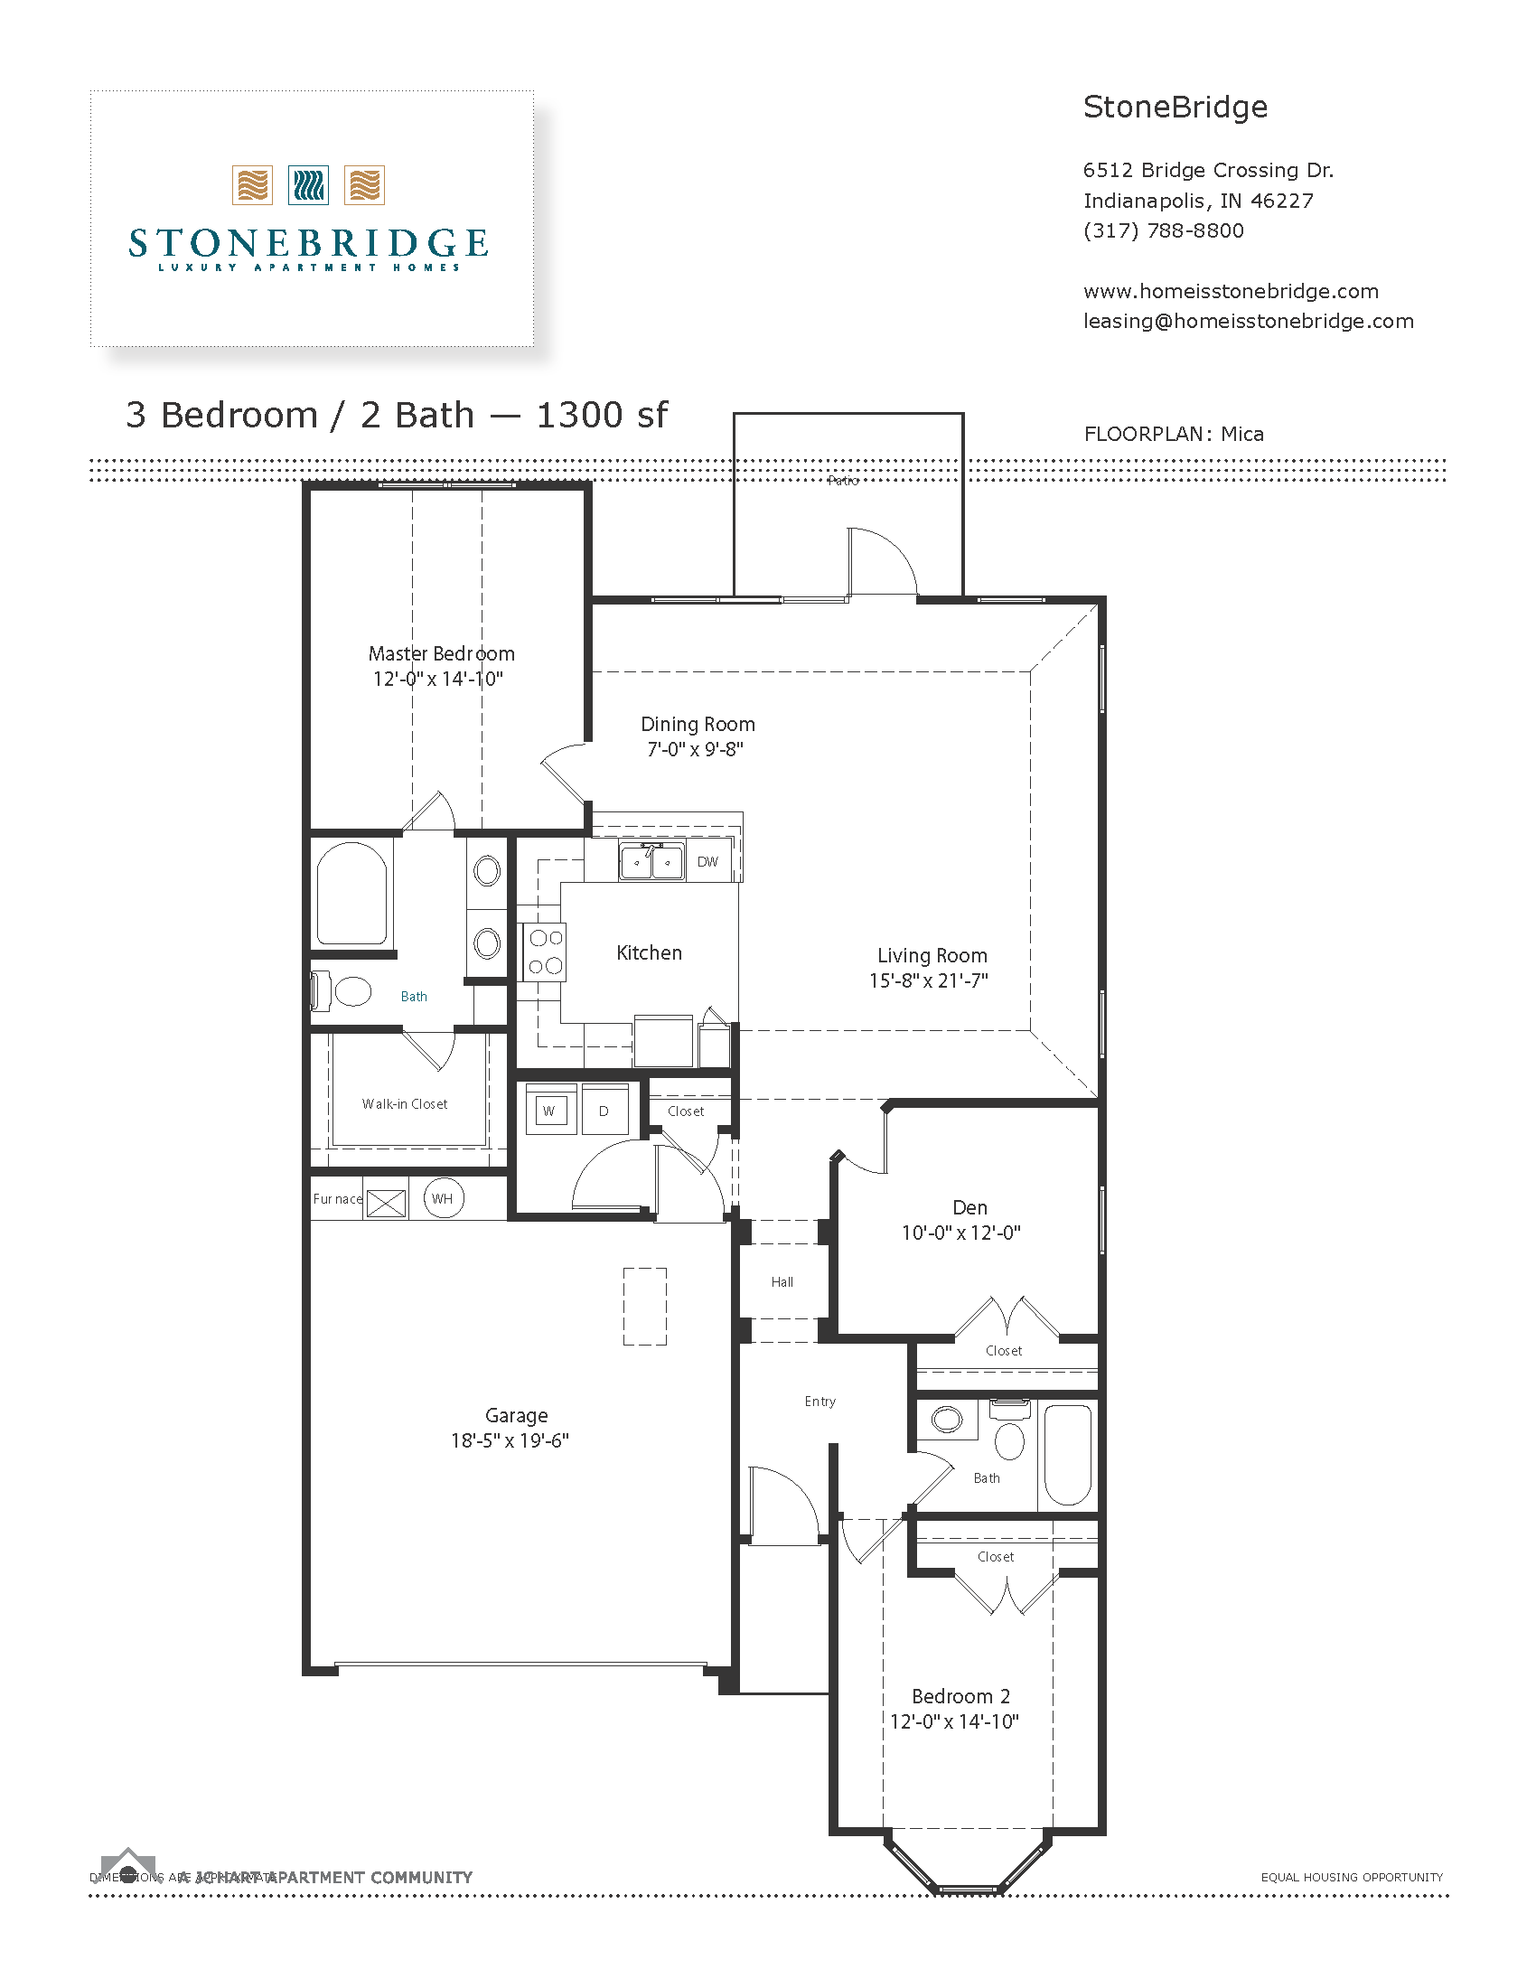 Mica floor plan - StoneBridge Apartment Homes _ Indianapolis apartments_preview.png